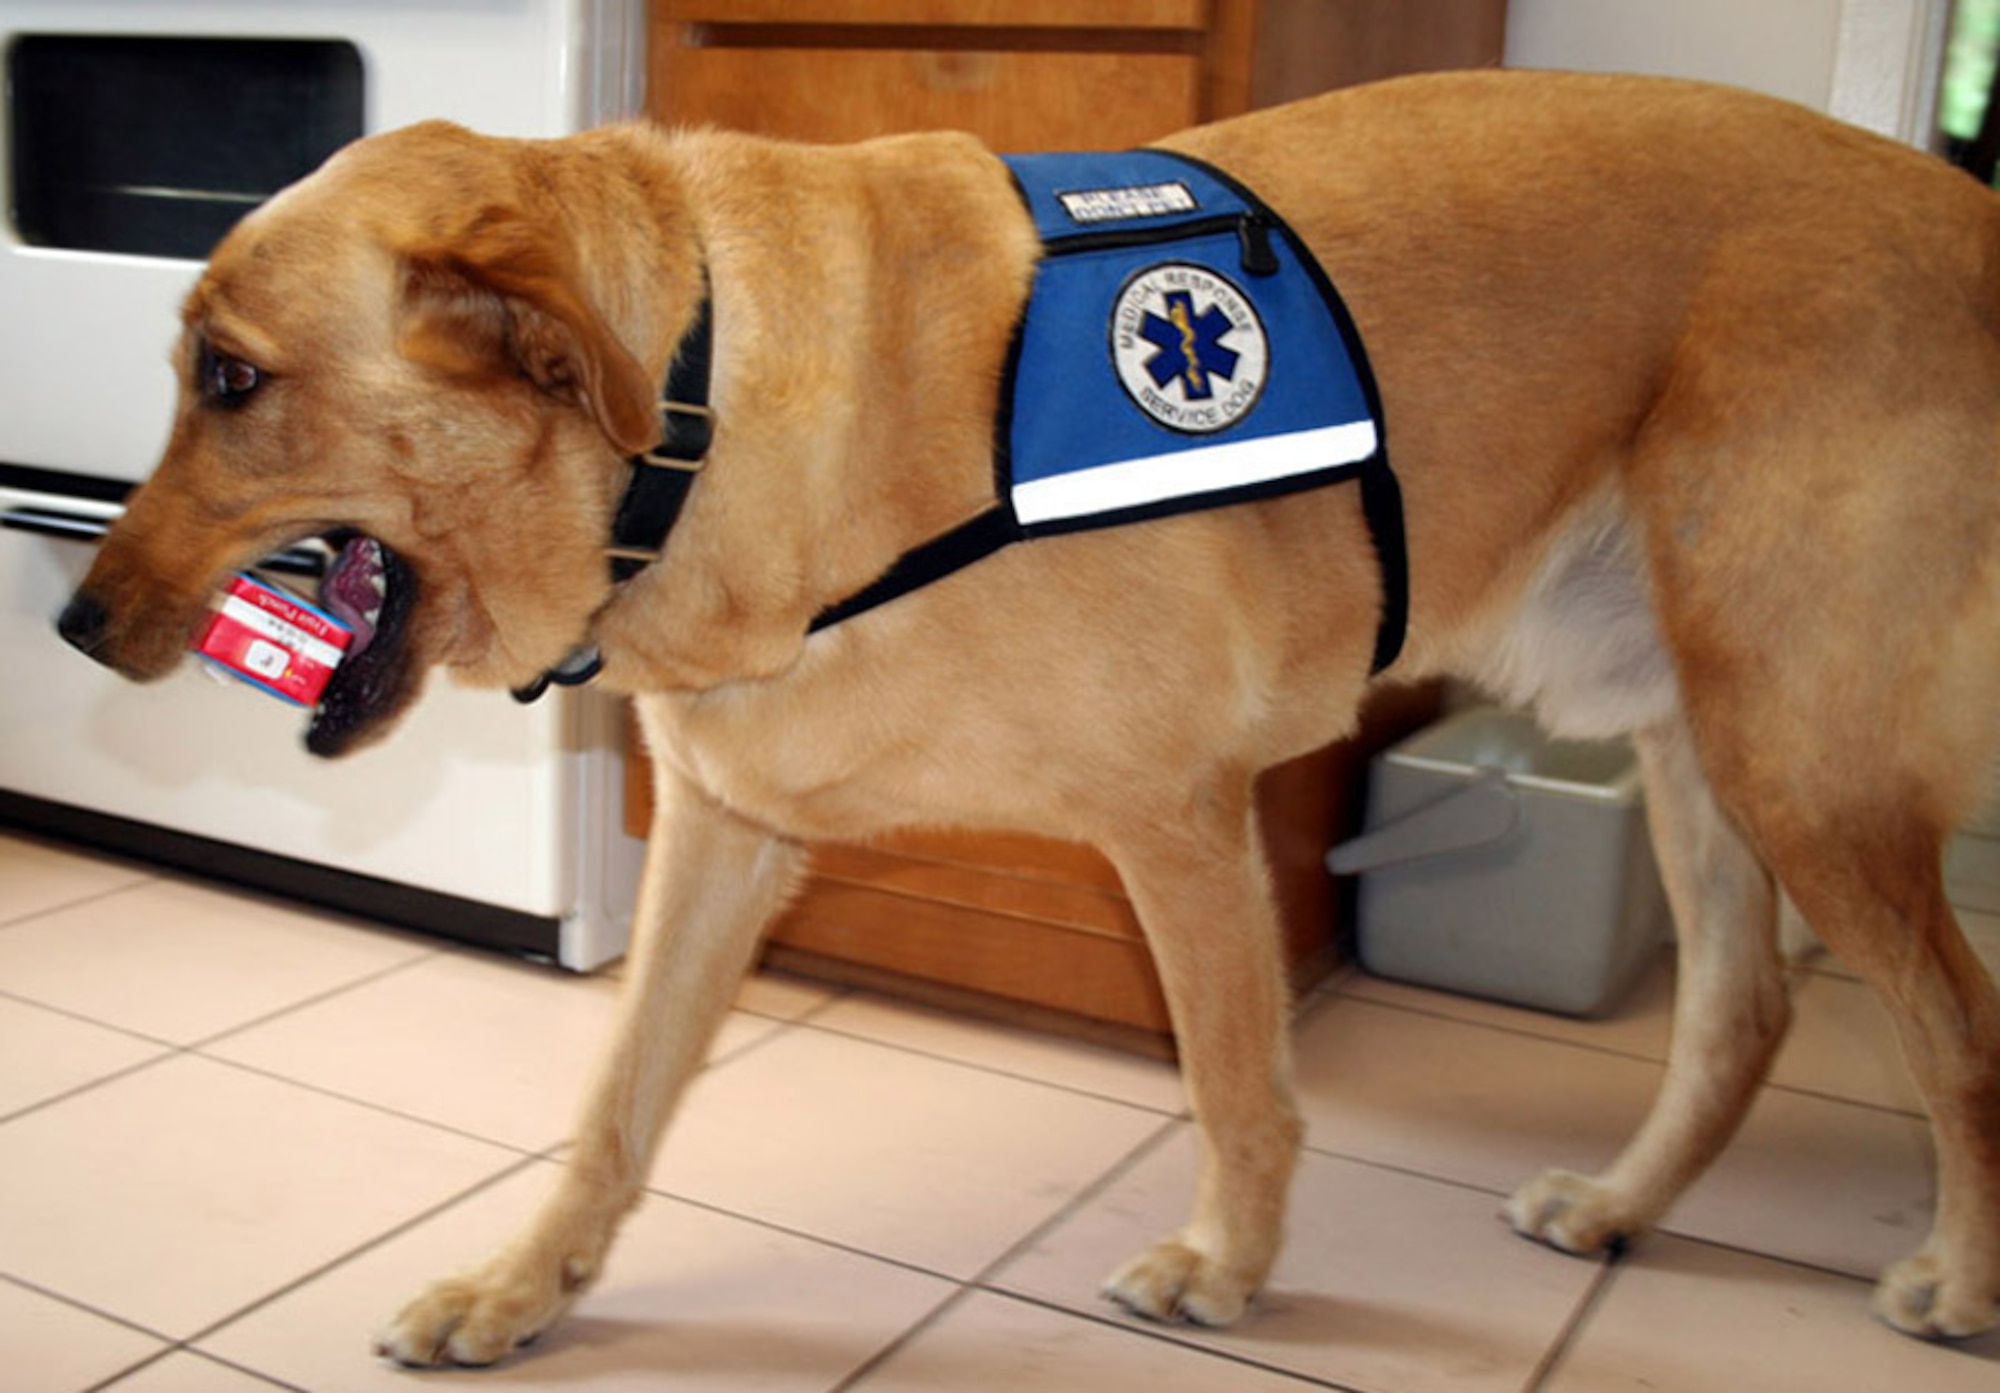 Will, a medical service dog, retrieves a juice box for his owner Danielle Londrigan, who has diabetes. (U.S. Air Force photo/Jamie Haig)